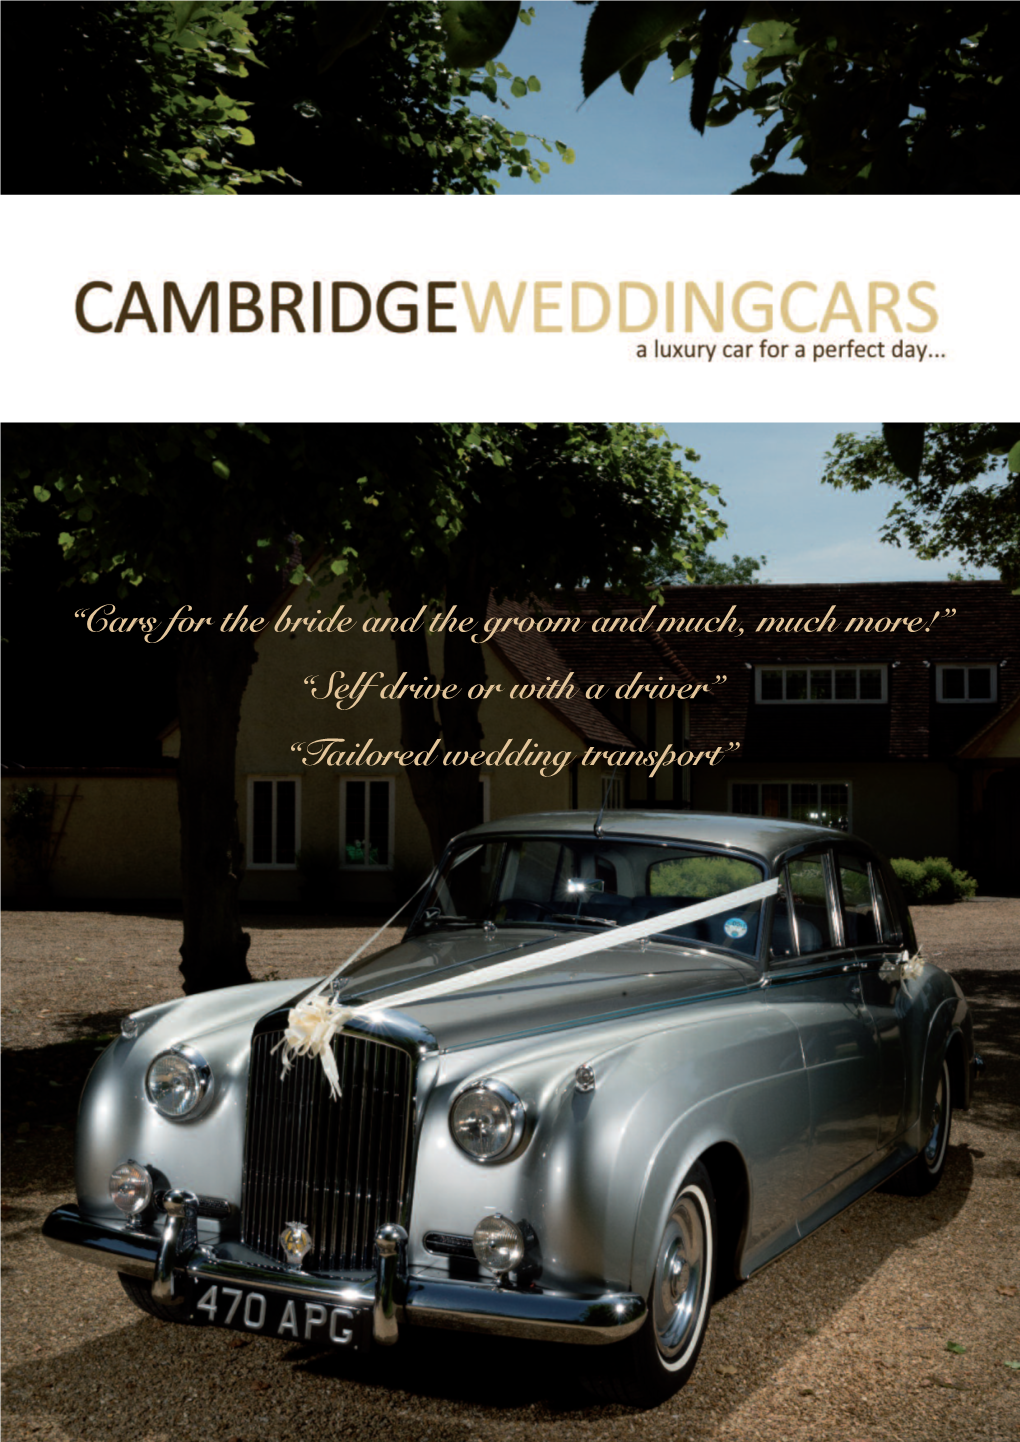 Cambridge Wedding Cars Broucher.Pdf